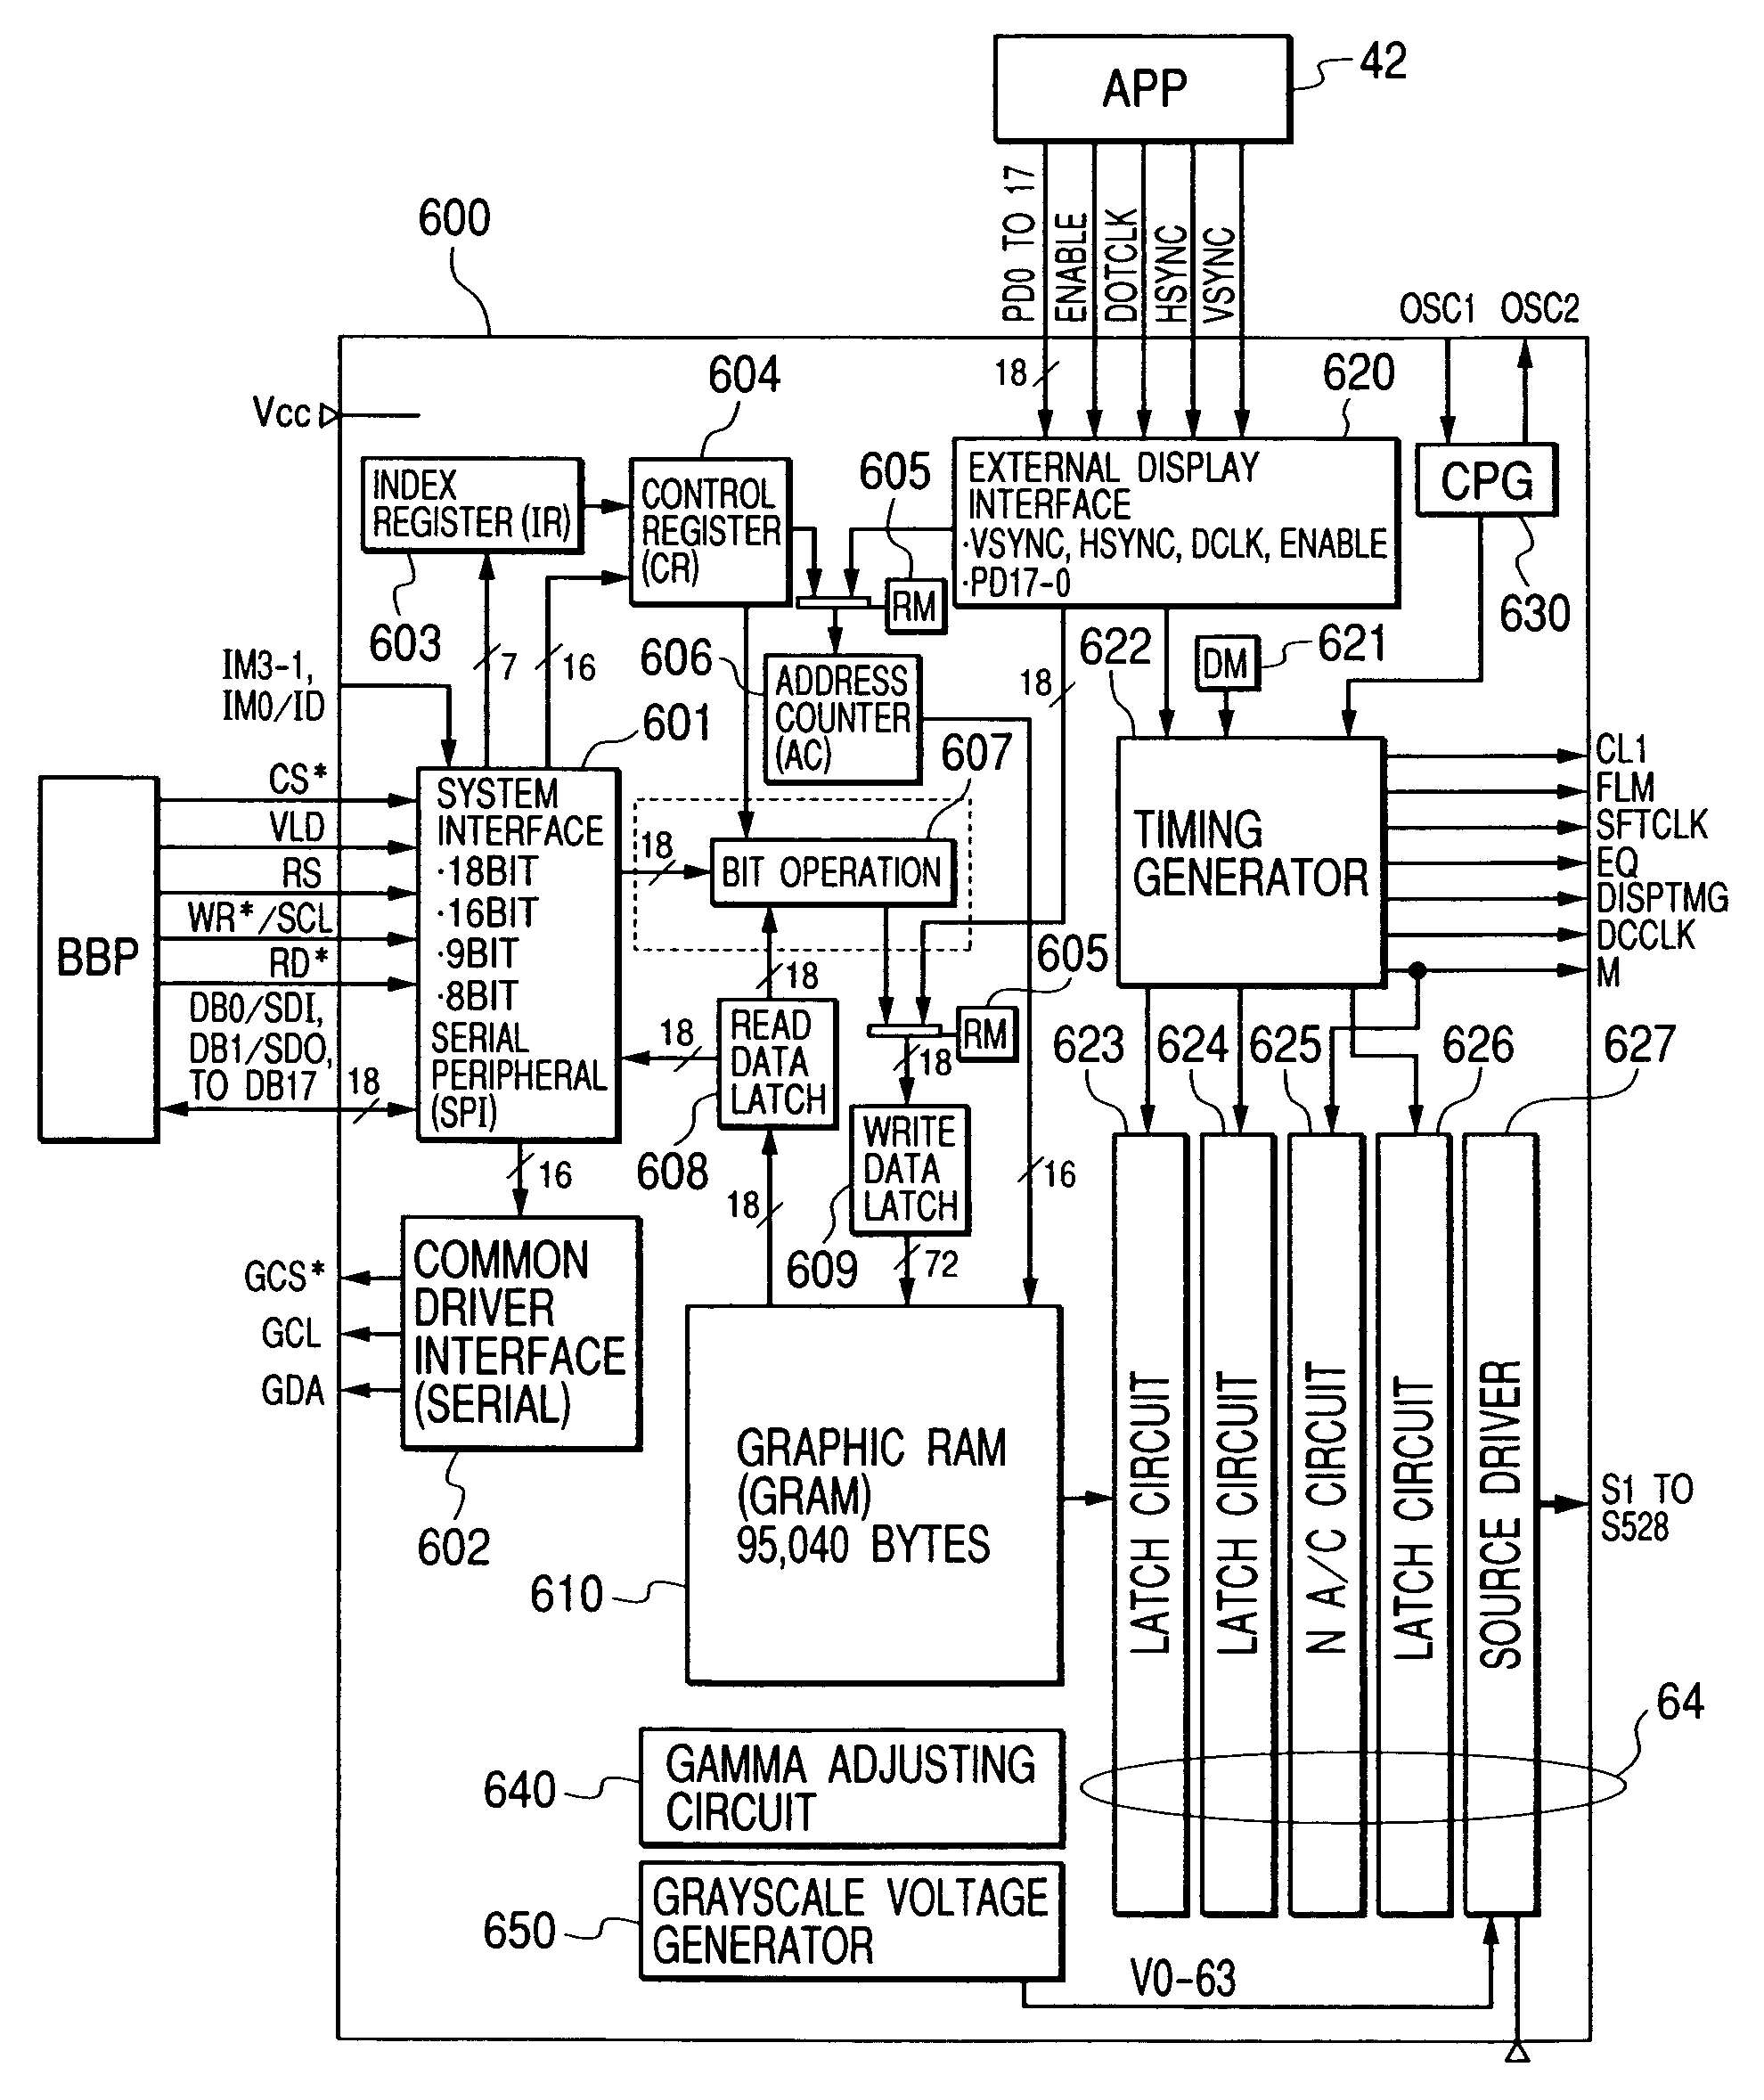 Display drive control circuit